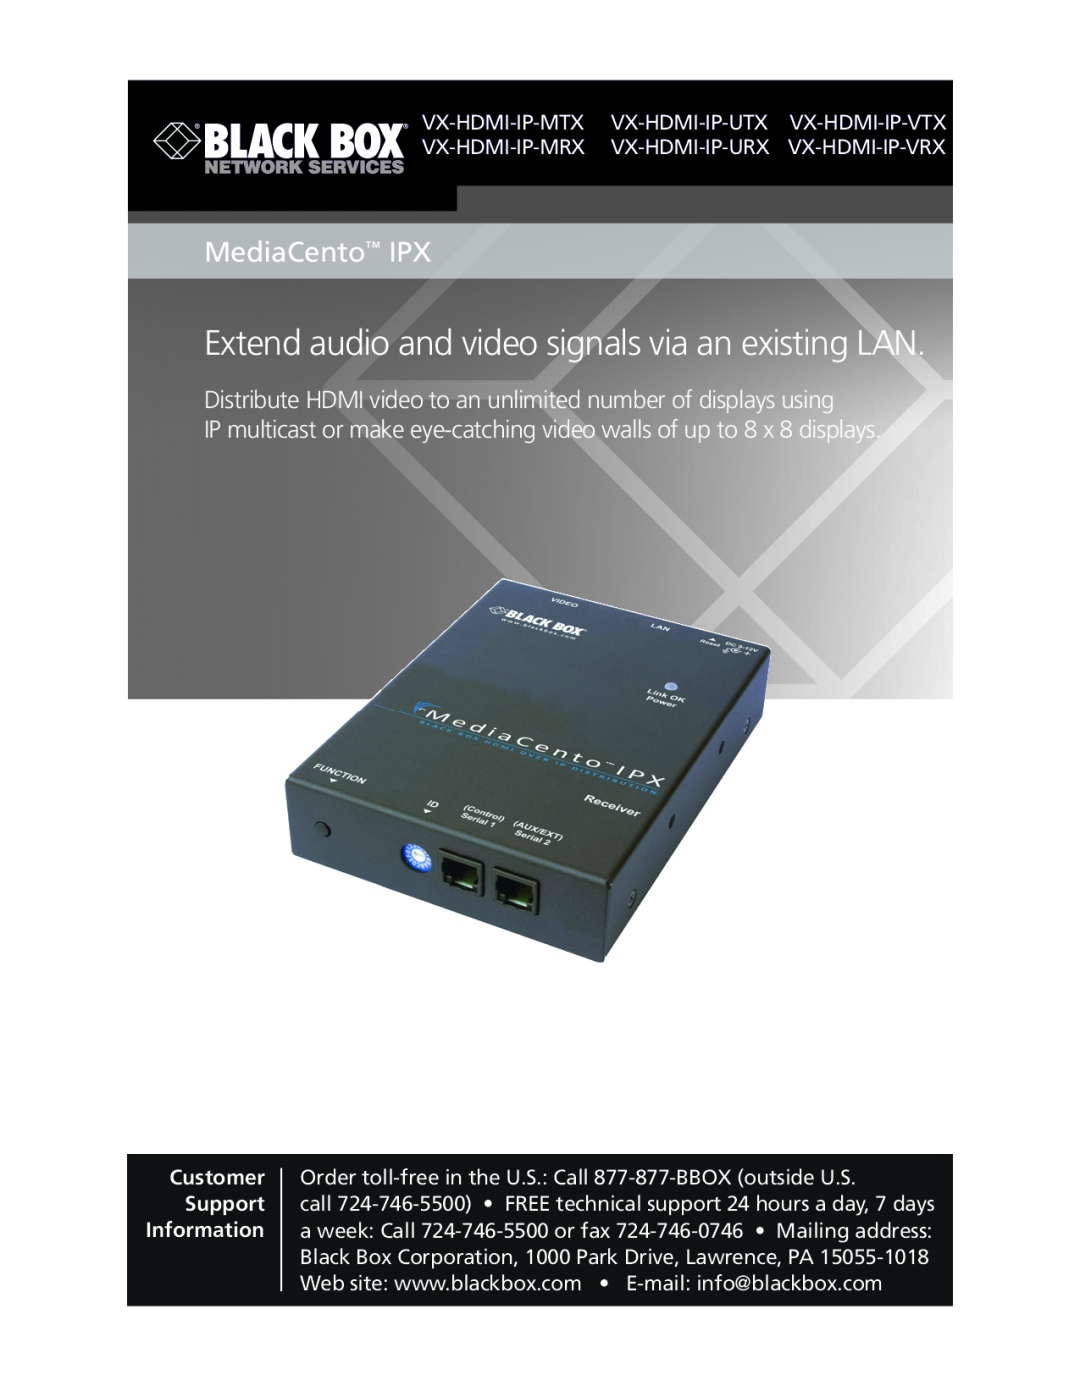 Black Box VX-HDMI-IP-MRX, VX-HDMI-IP-VTX manual MediaCento IPX, Extend audio and video signals via an existing LAN 